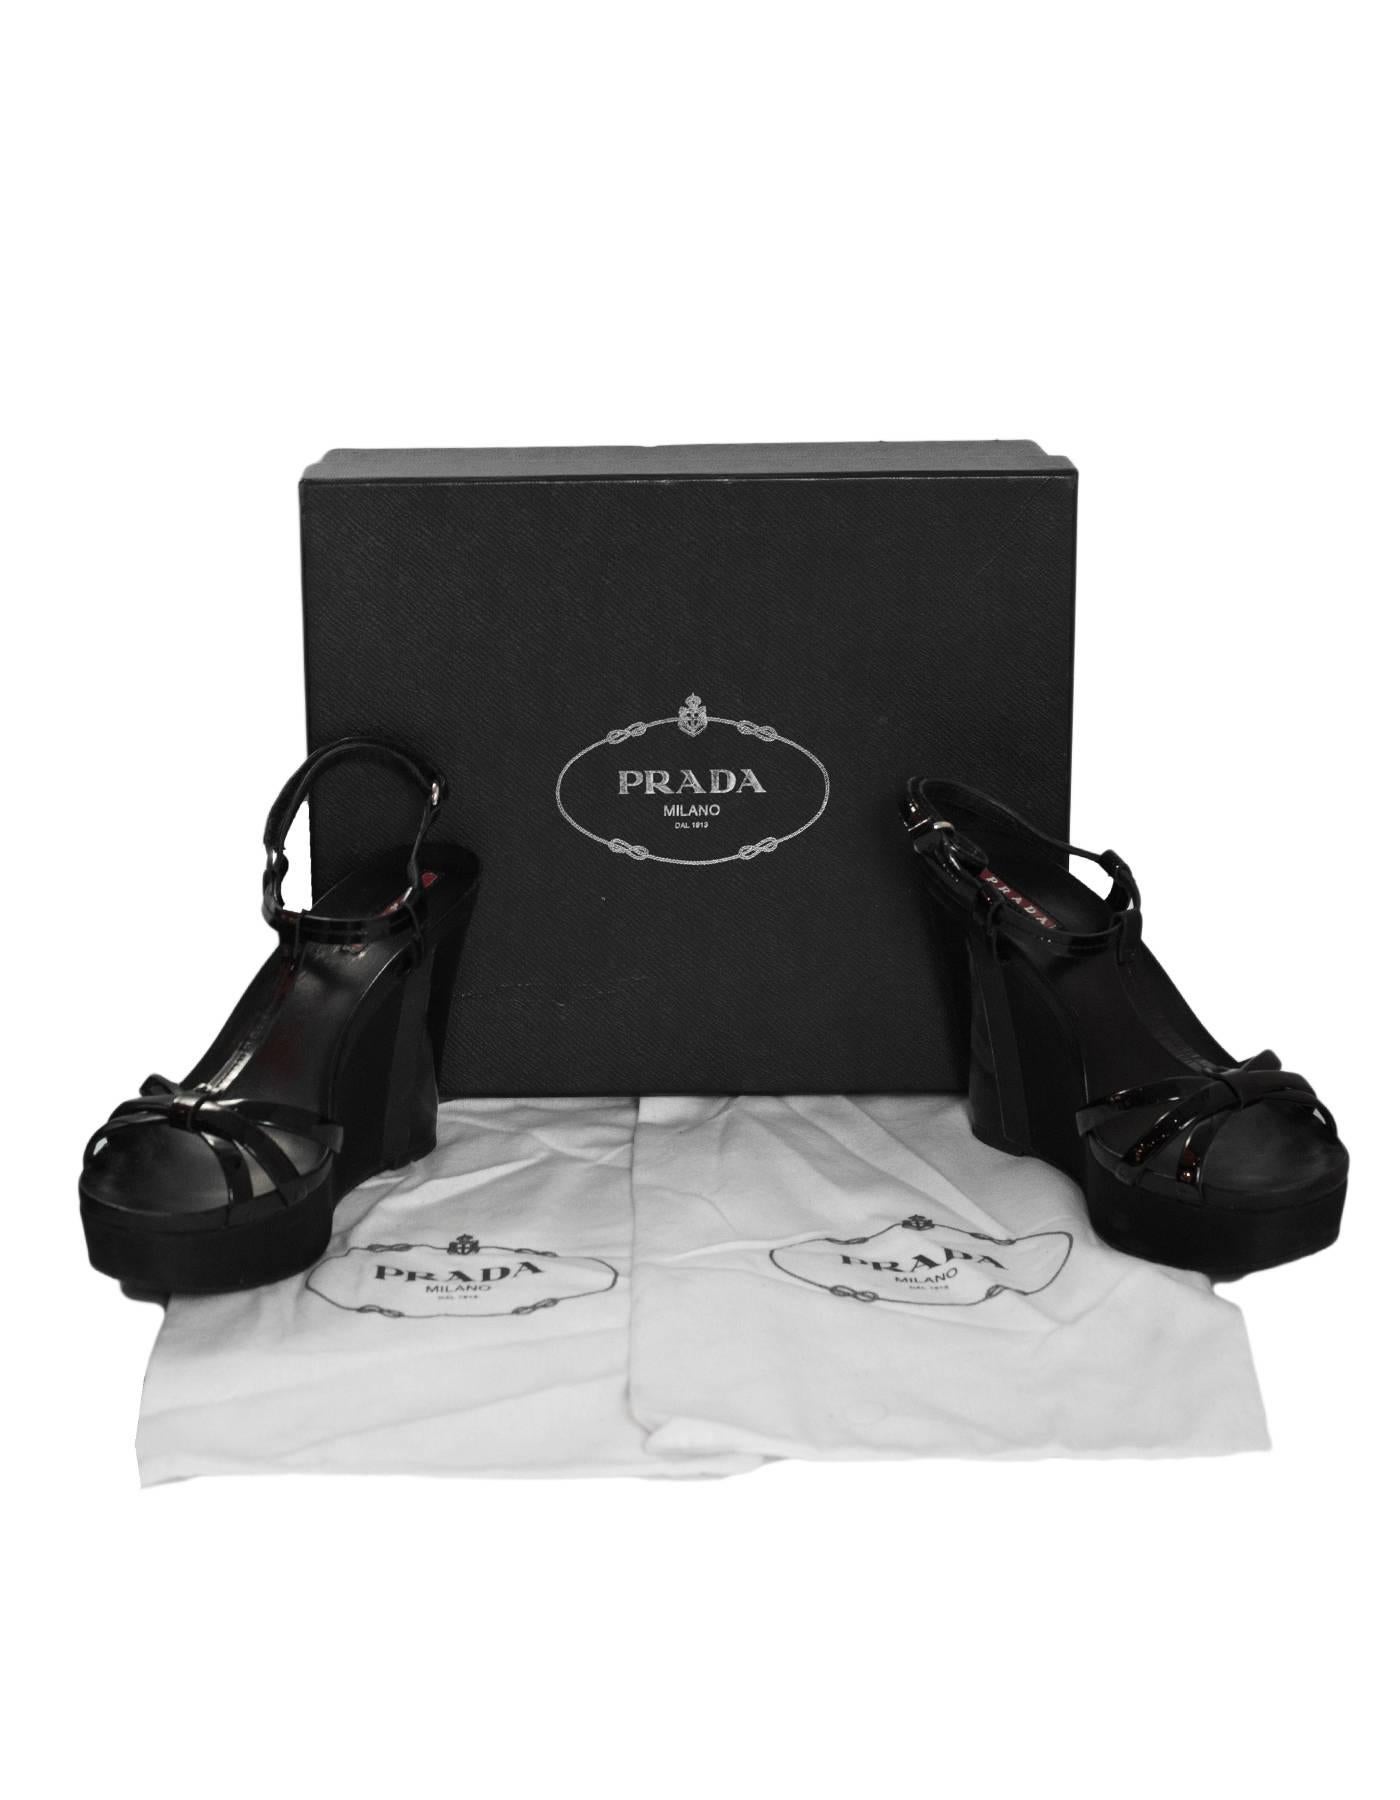 Women's Prada Sport Black Patent T-Strap Wedge Sandals Sz 38.5 